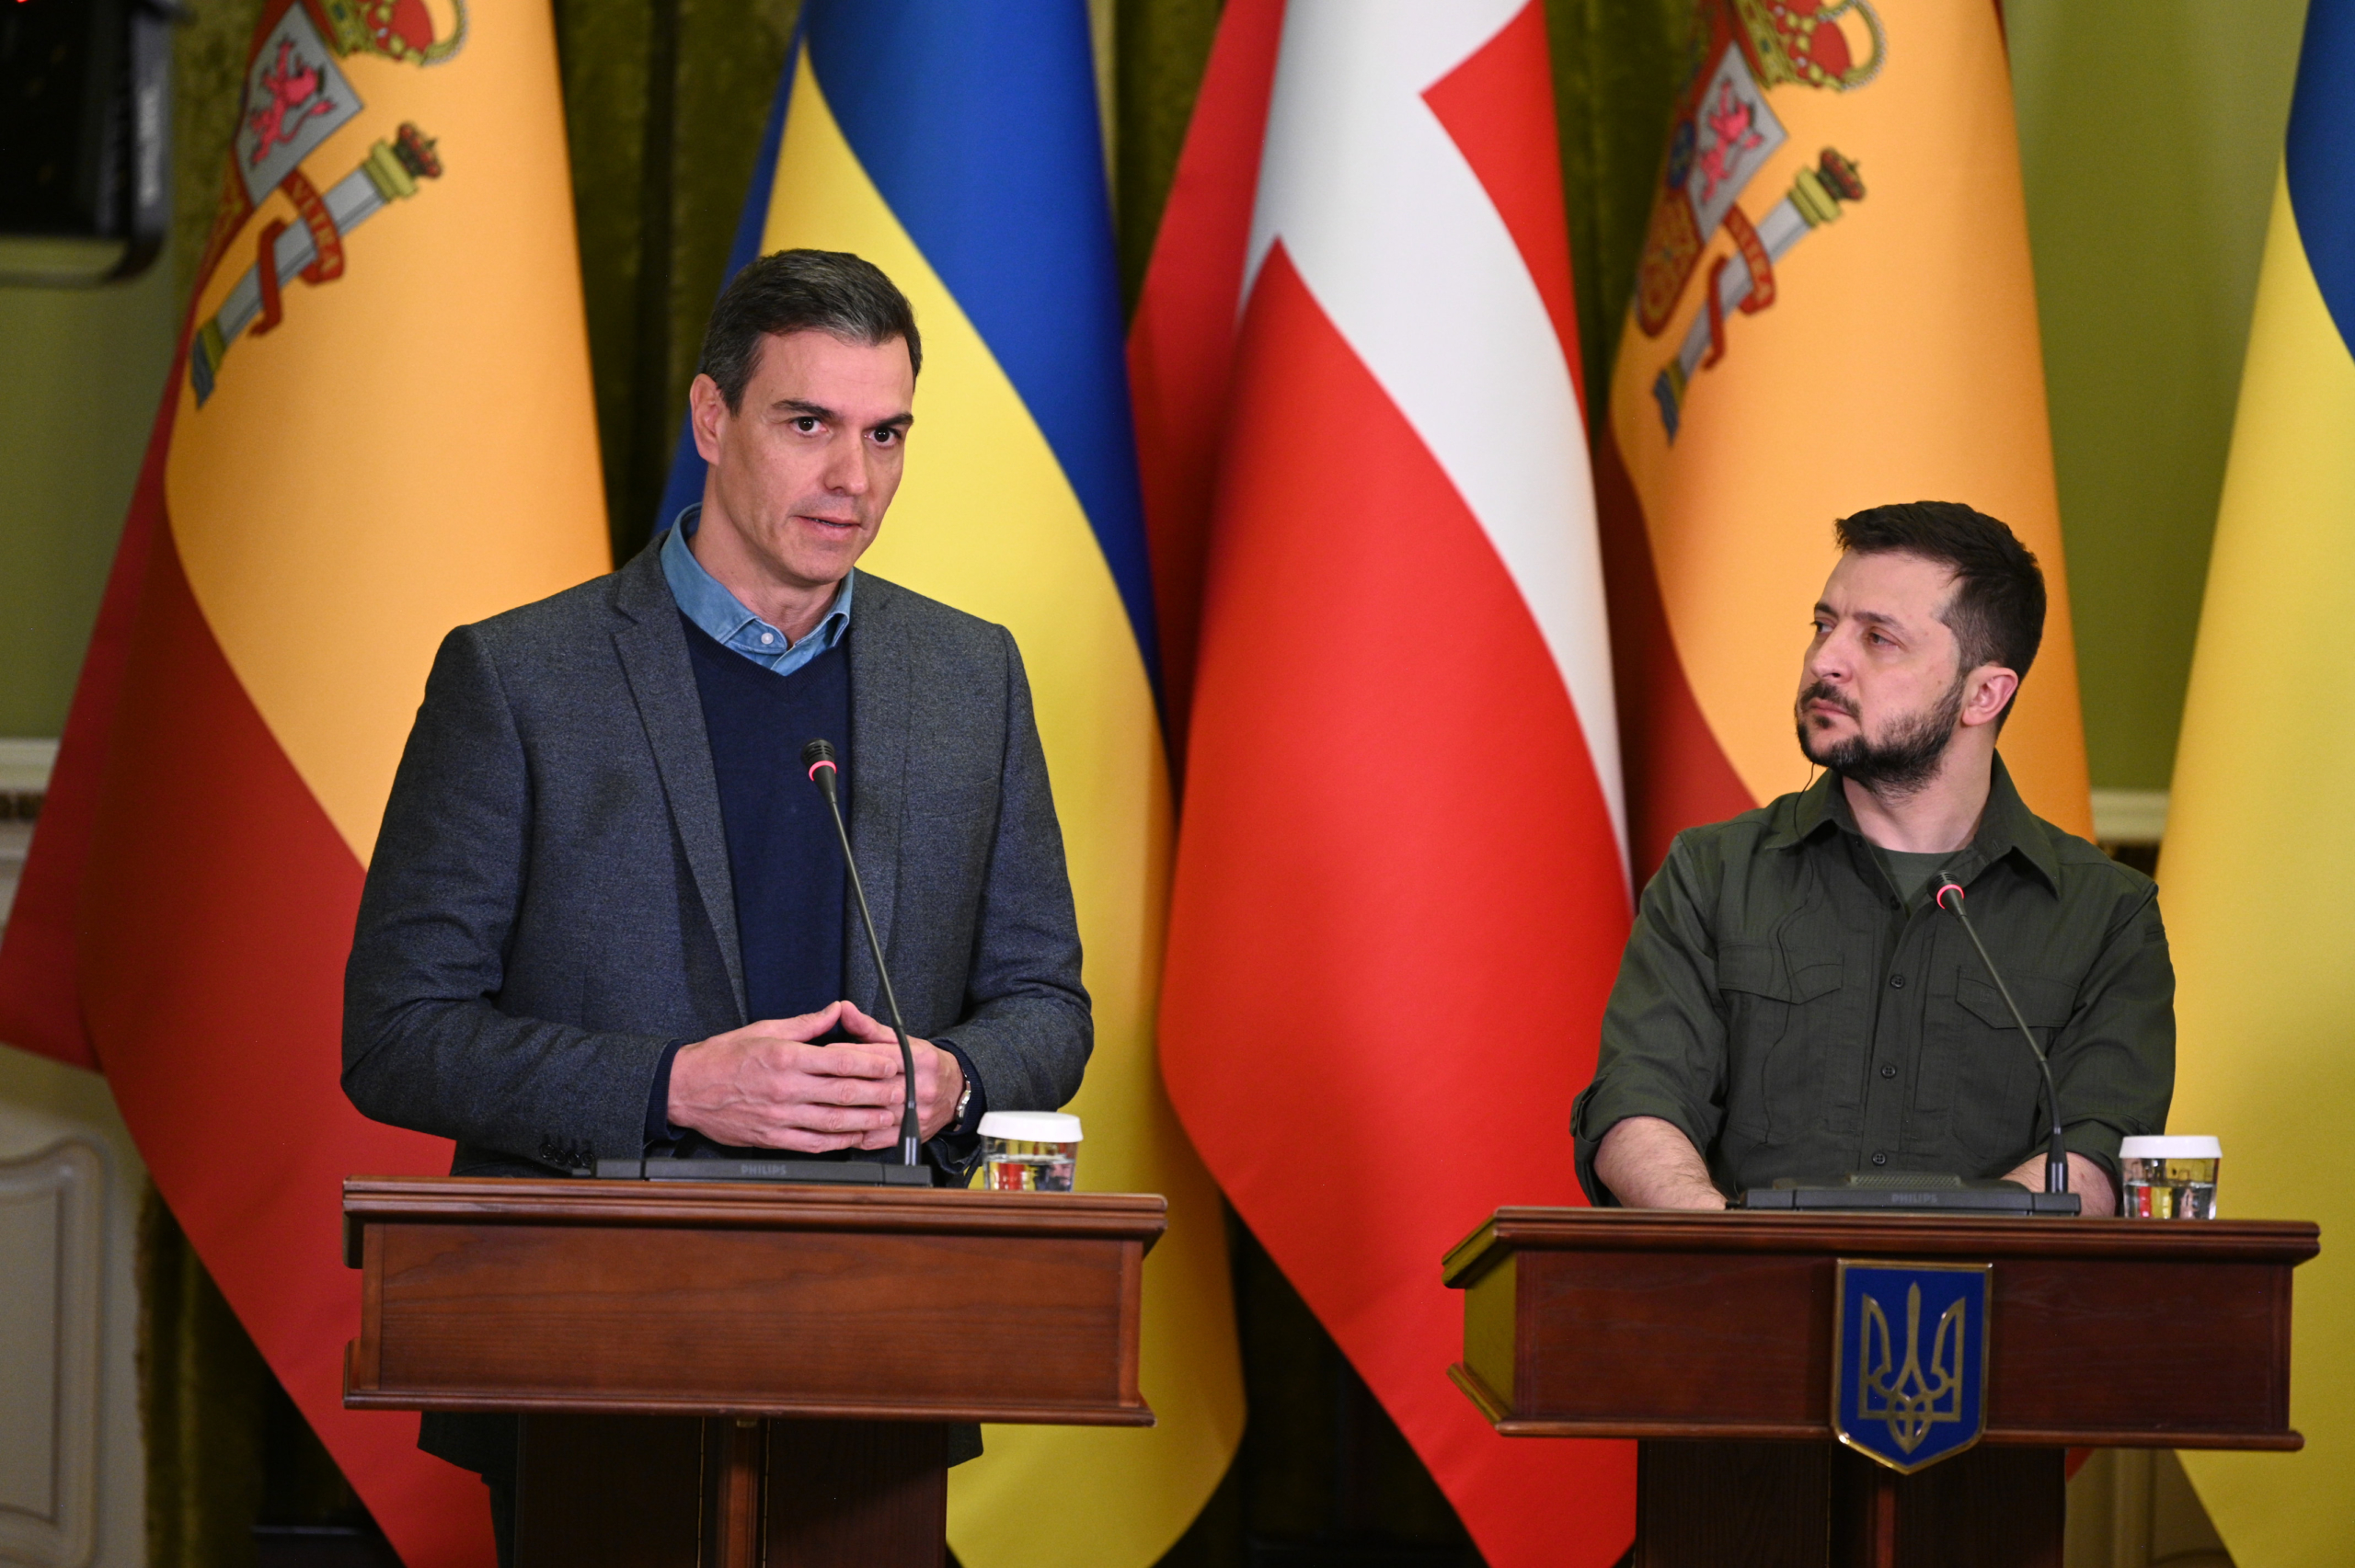 El president del govern espanyol, Pedro Sánchez, en roda de premsa acompanyat del president ucraïnès, Volodímir Zelenski / ACN